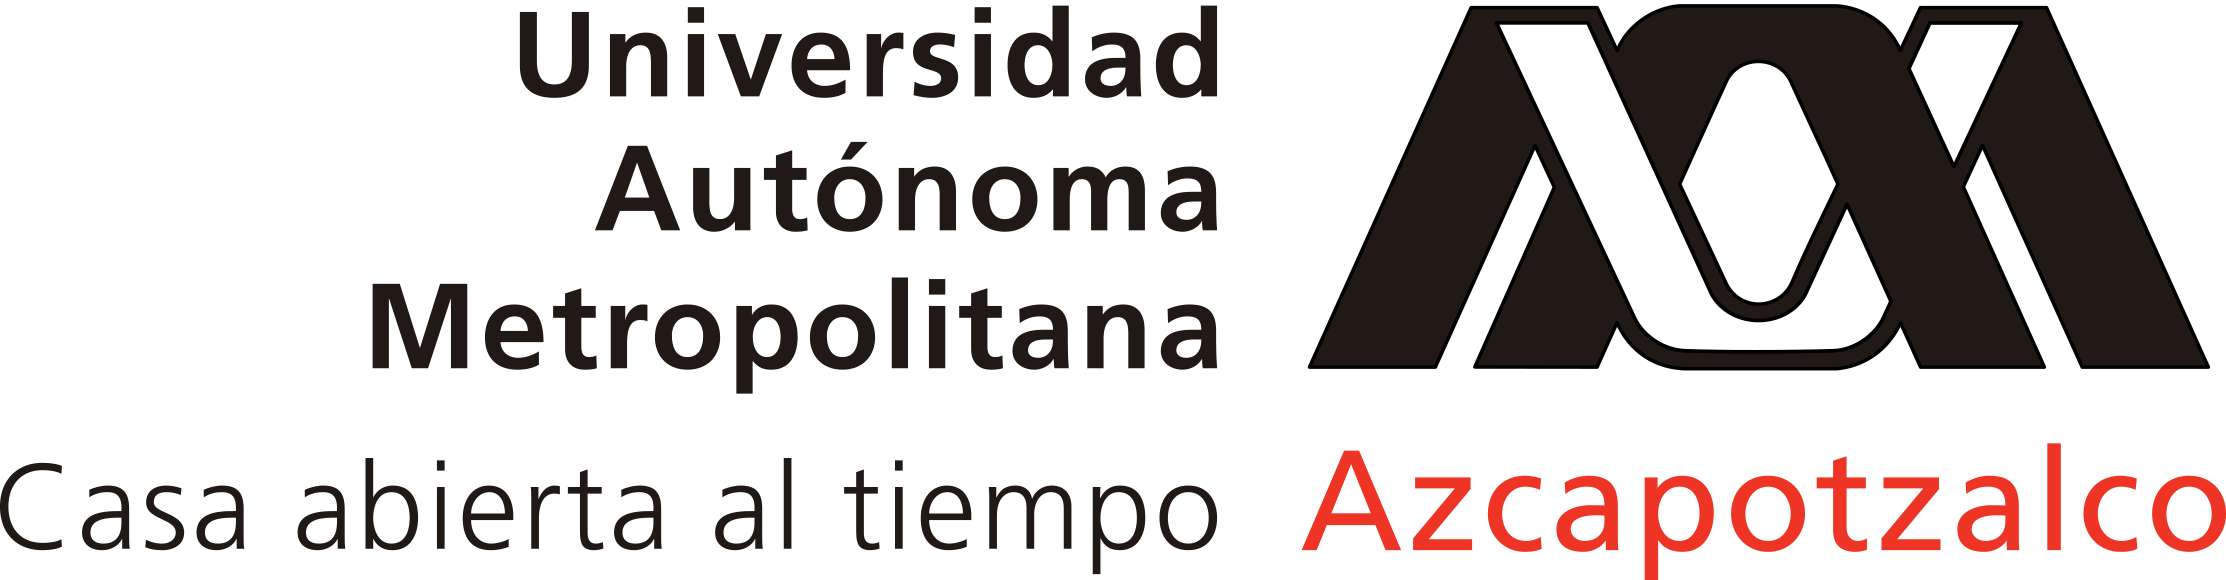 Universidad Autónoma Metropolitana Logo